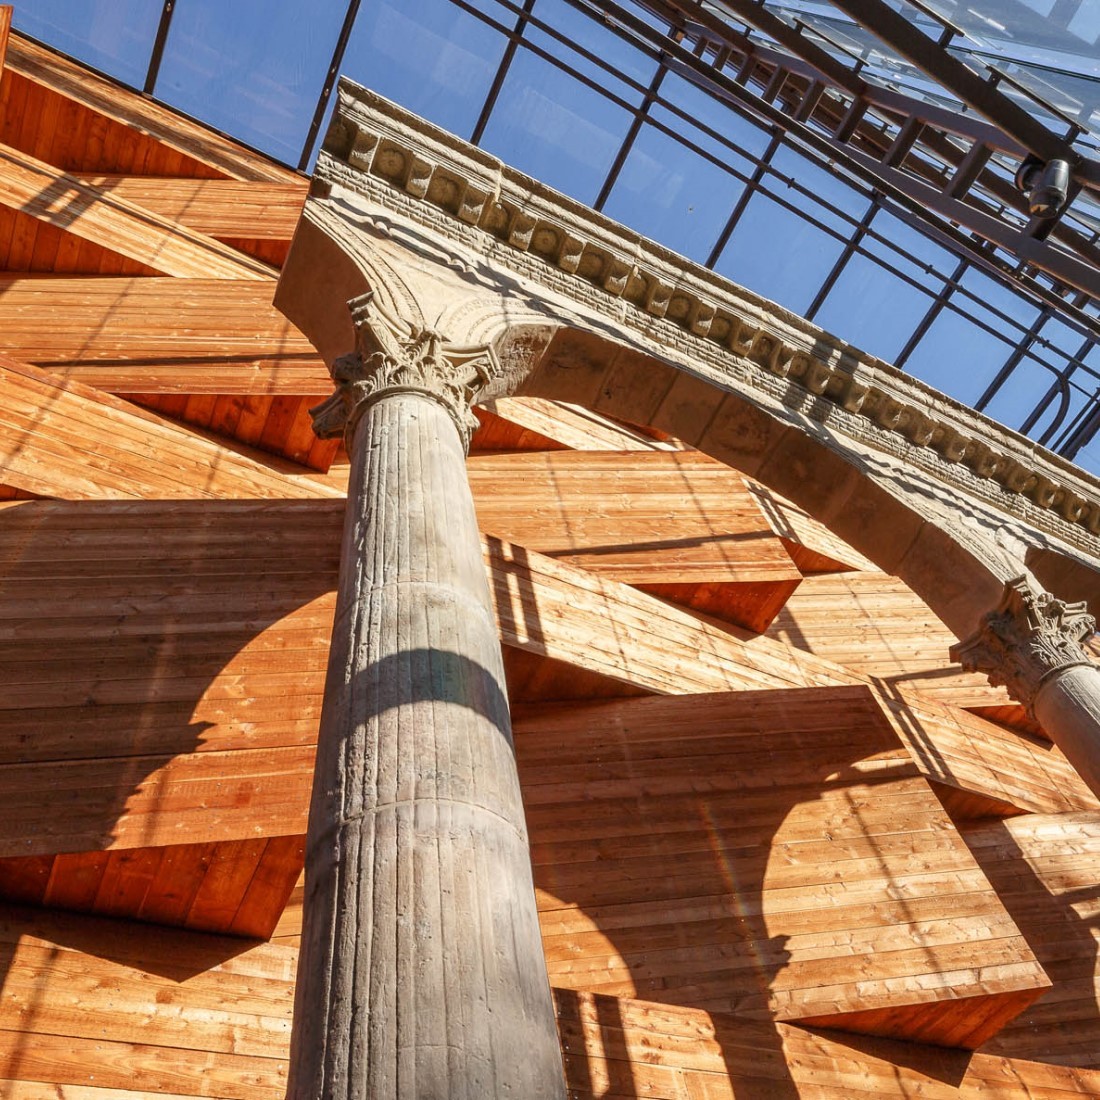 Blick an der Holzfassade des Museums entland. Davor steht ein römischer Bogen. Foto: J. Vogel, LVR-LandesMuseum Bonn.